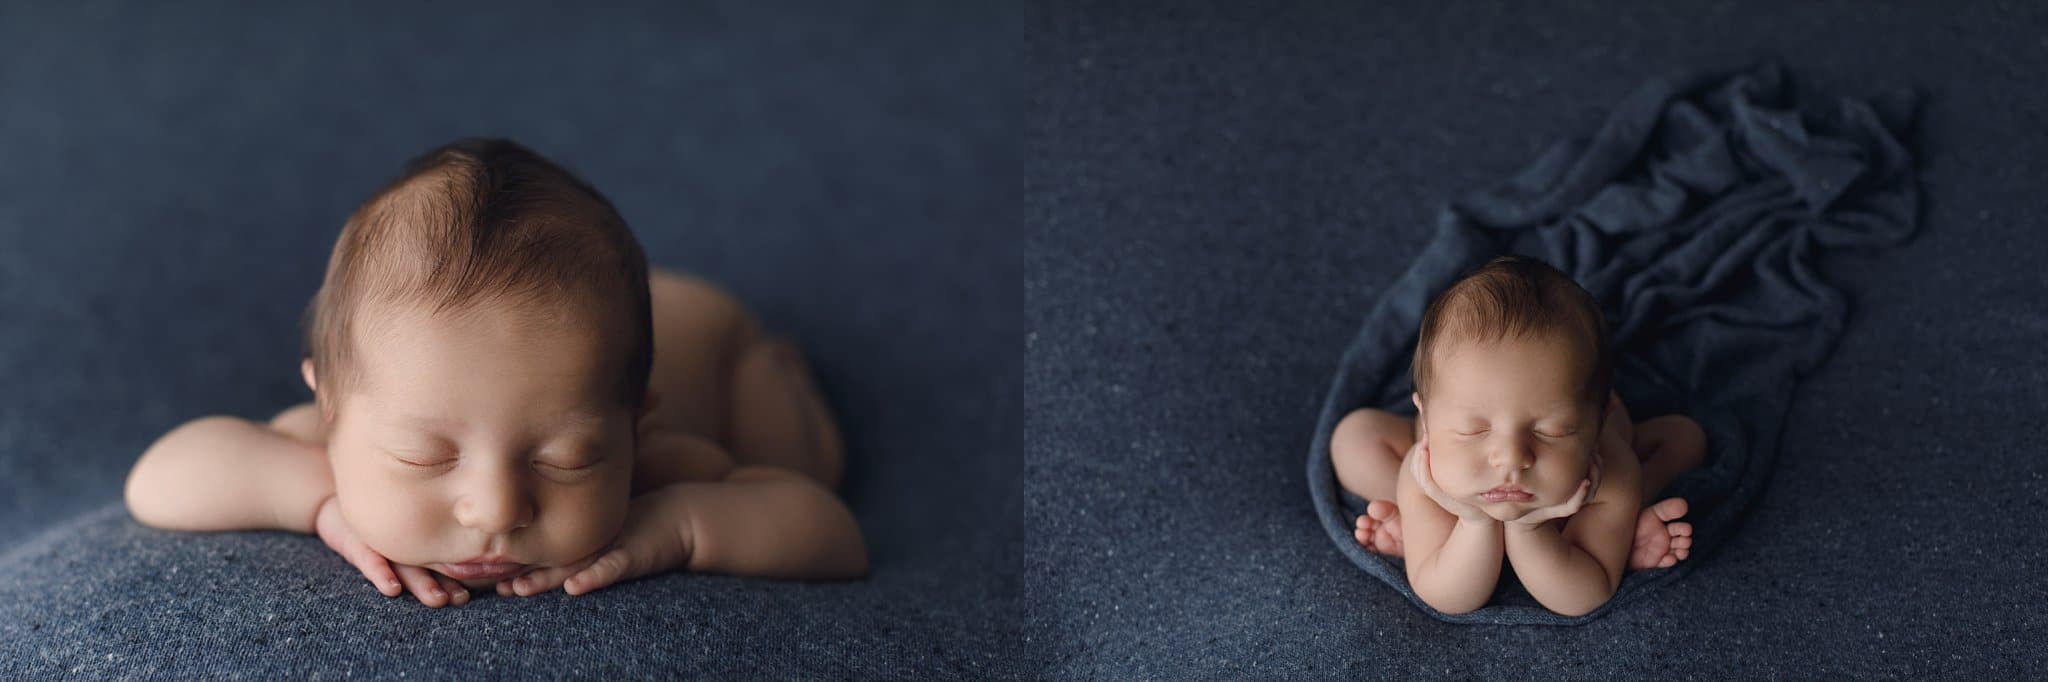 baby photography newborn baby boy sleepy on dark blue blanket froggy pose